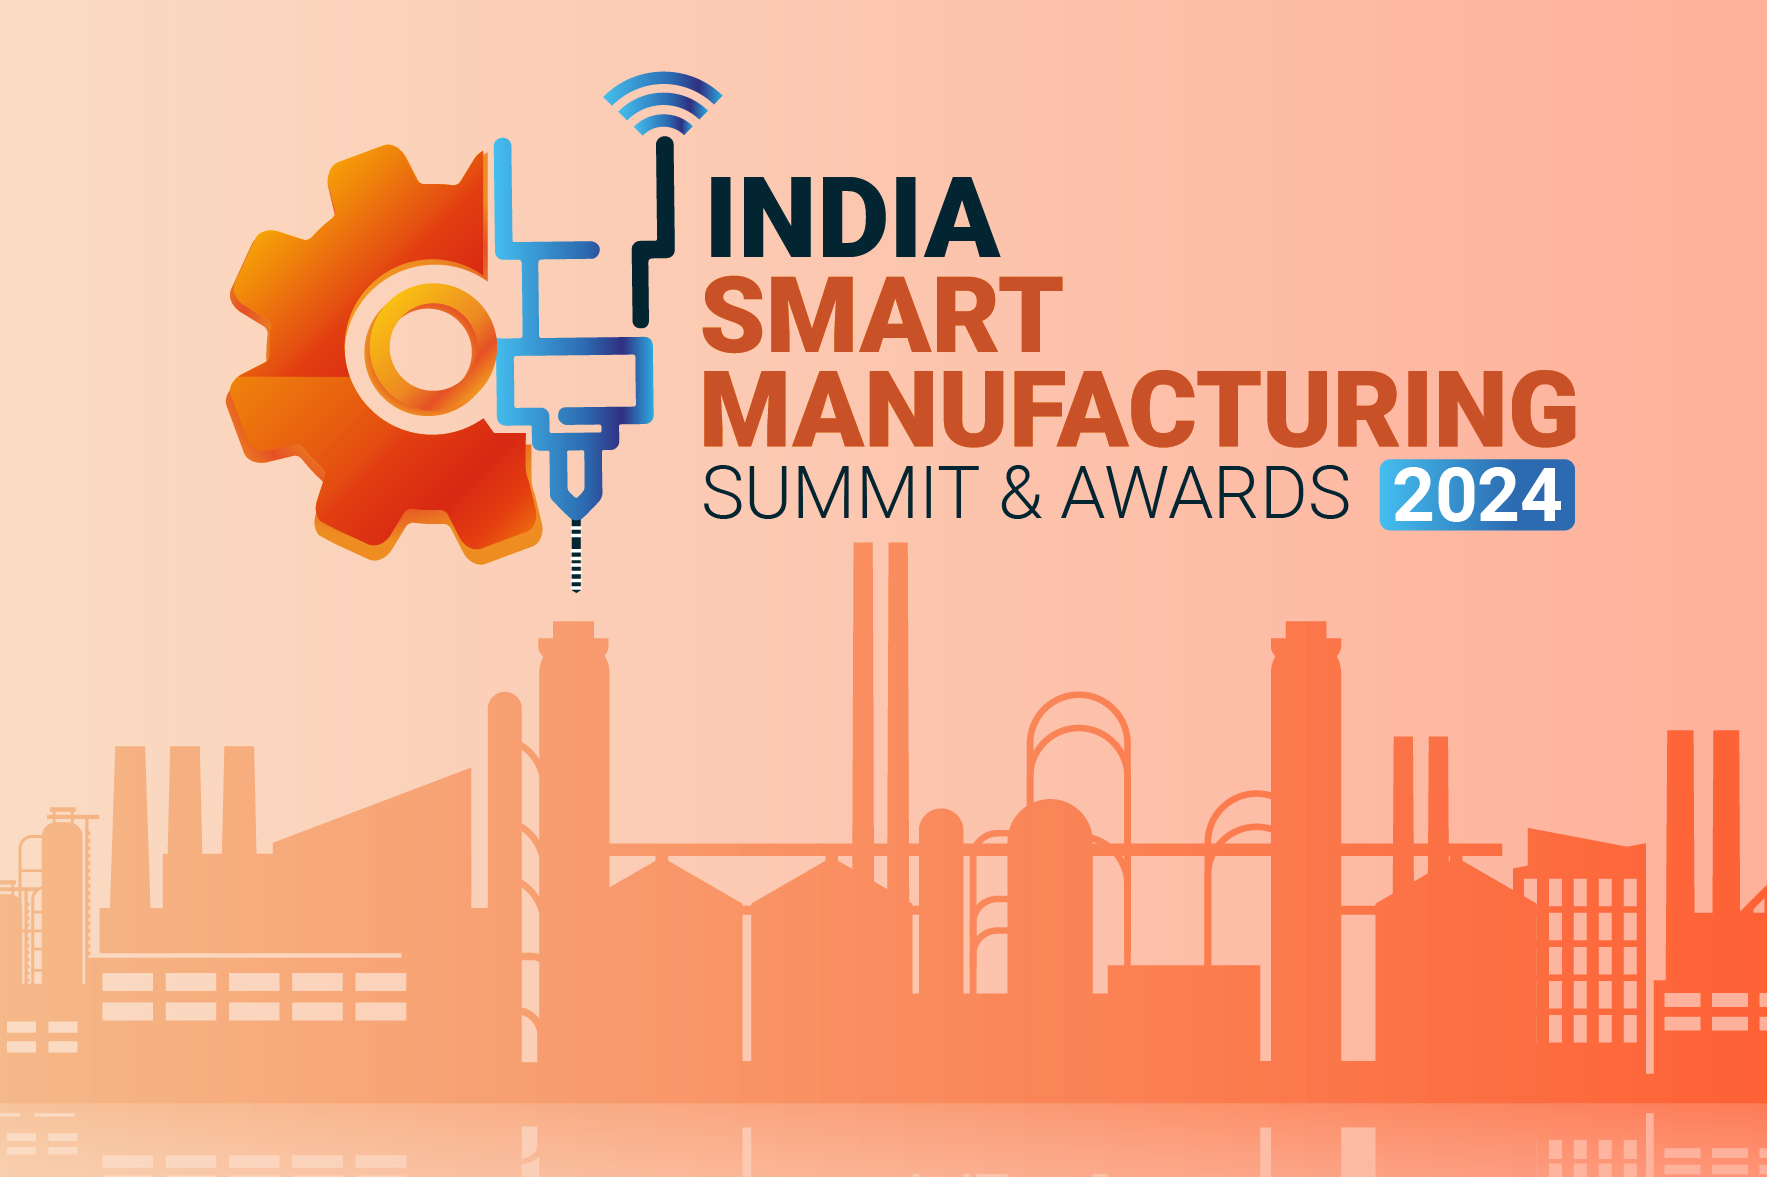 India Manufacturing Summit & Awards 2024